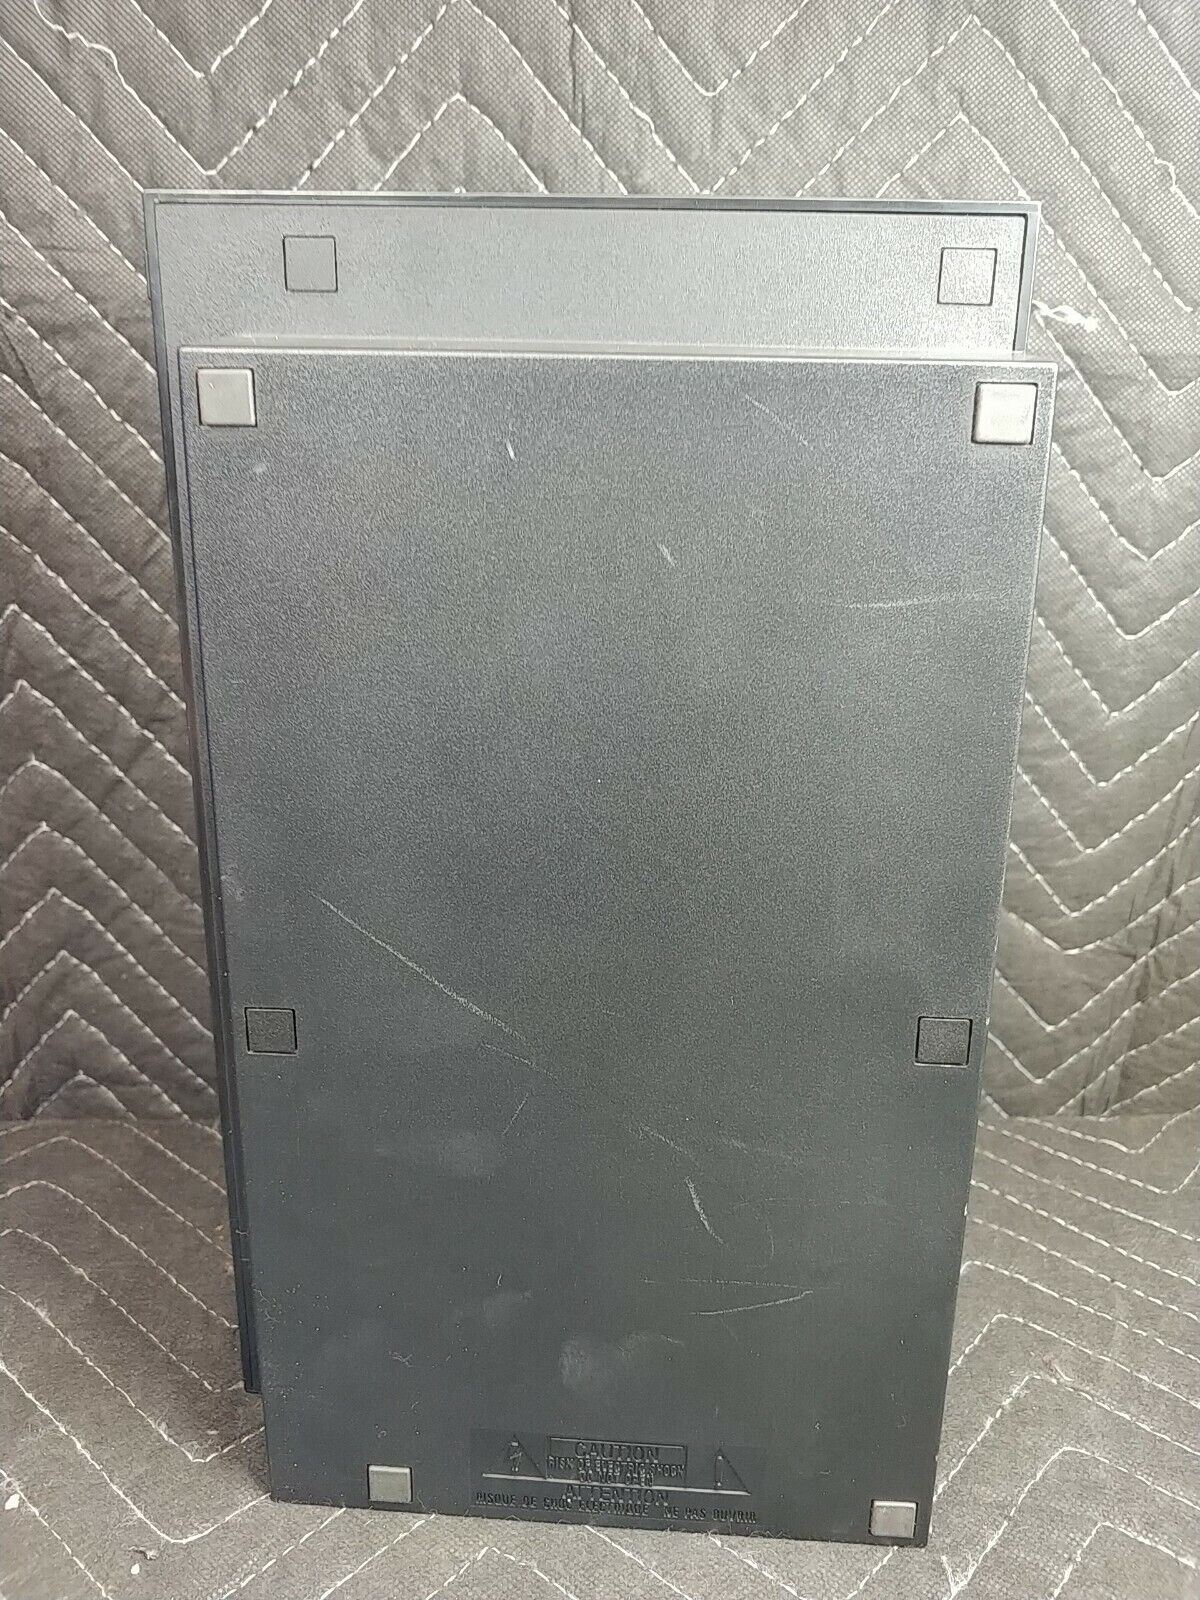 Sony PlayStation 2 Console SCPH-39001/97004 Original Box 2 Controls